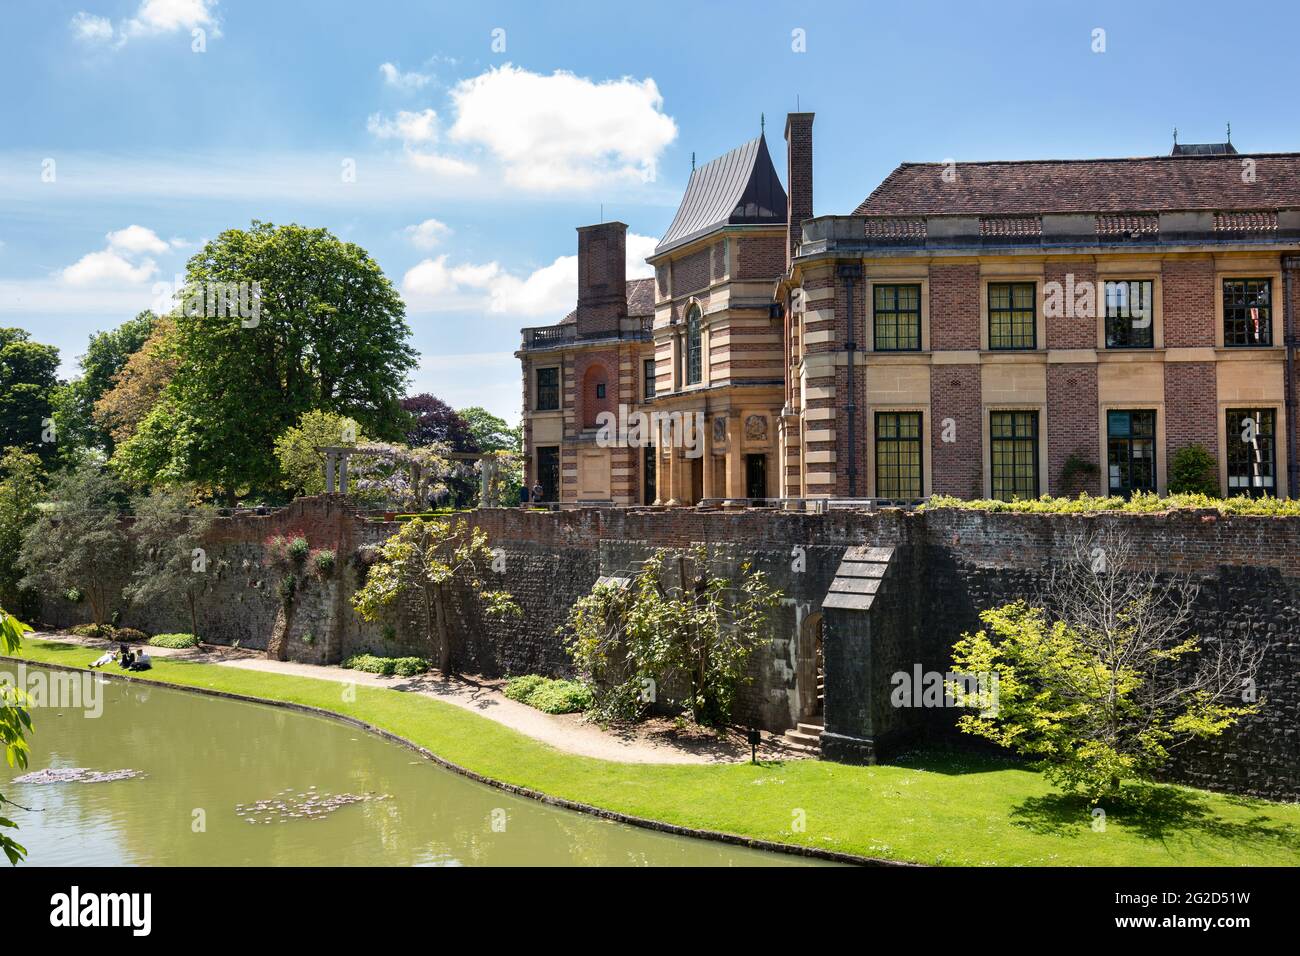 Eltham Palace and Gardens, Londres, Royaume-Uni Banque D'Images